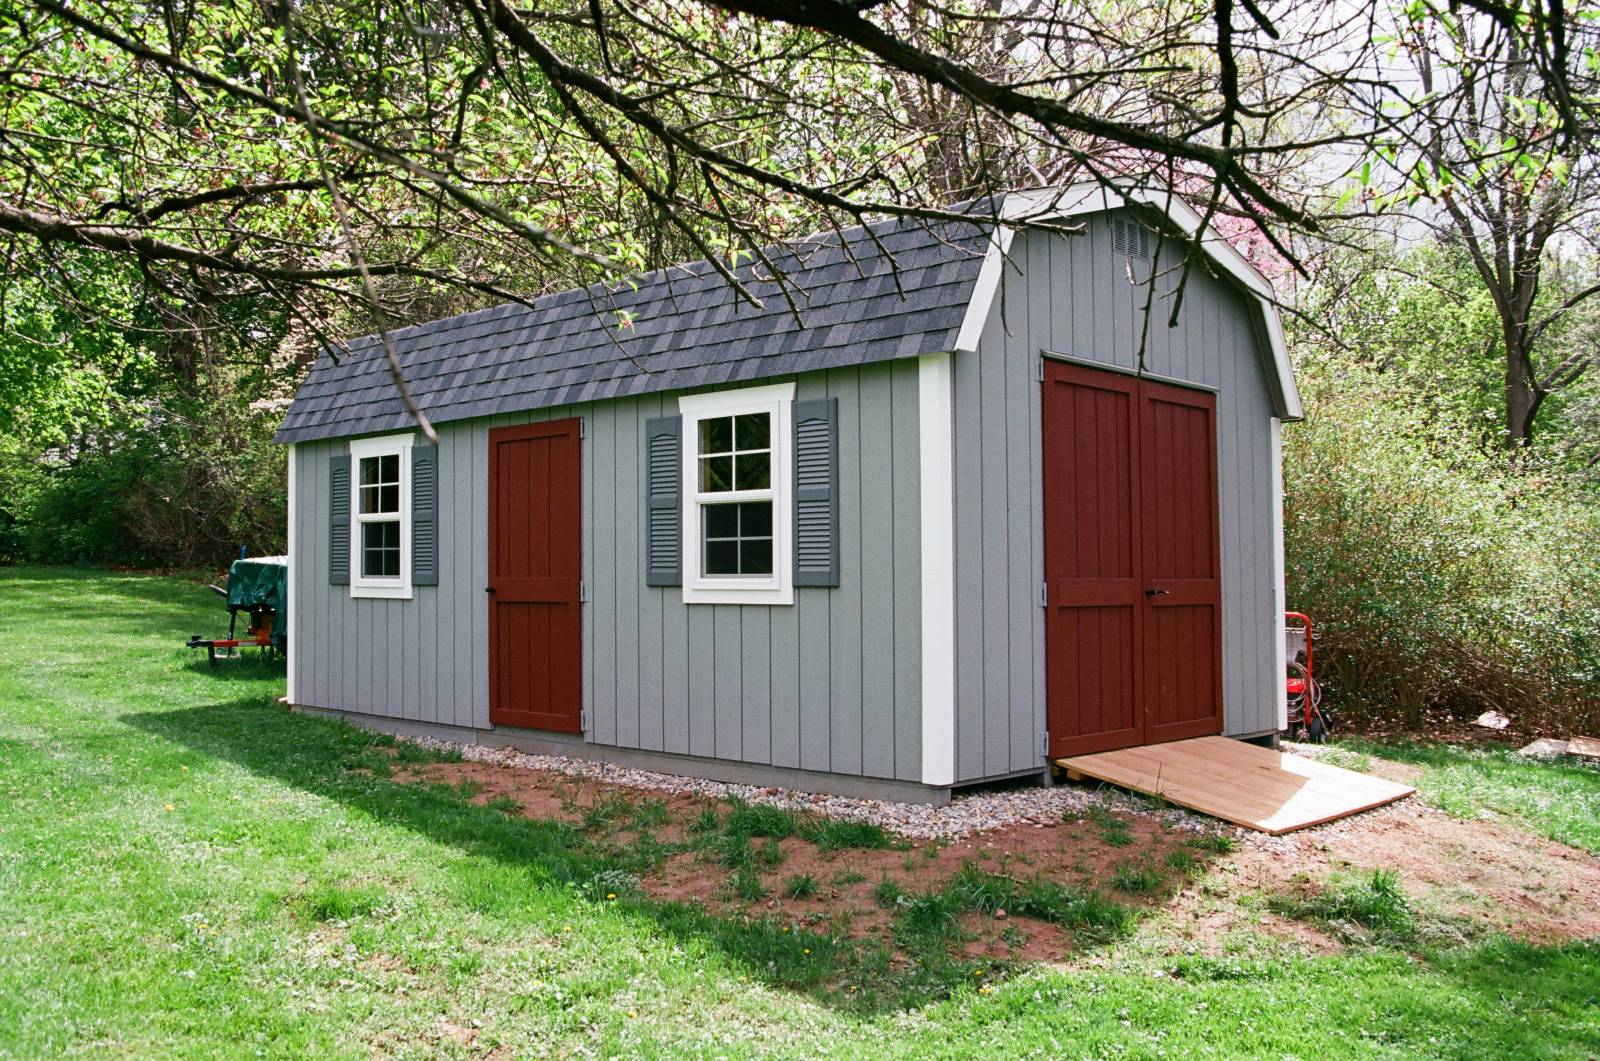 12' x 20' Classic Dutch Storage Shed (Ellington CT) • Gambrel Roof • Ronks Gray Duratemp T1-11 Siding • Barn Red Doors